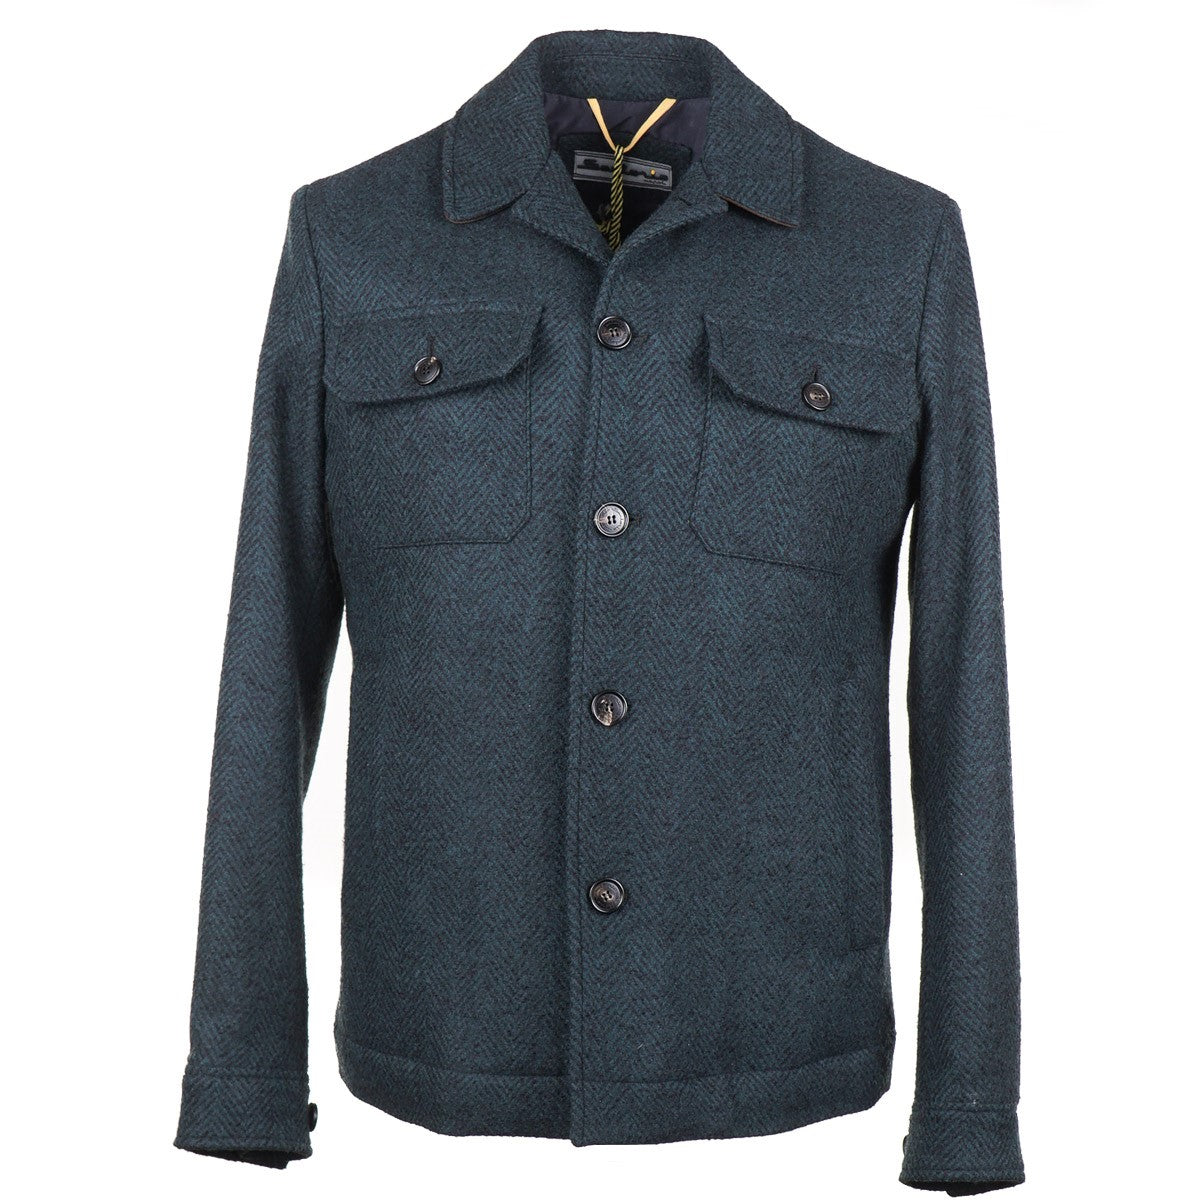 Sartorio Soft Wool Shirt-Jacket - Top Shelf Apparel